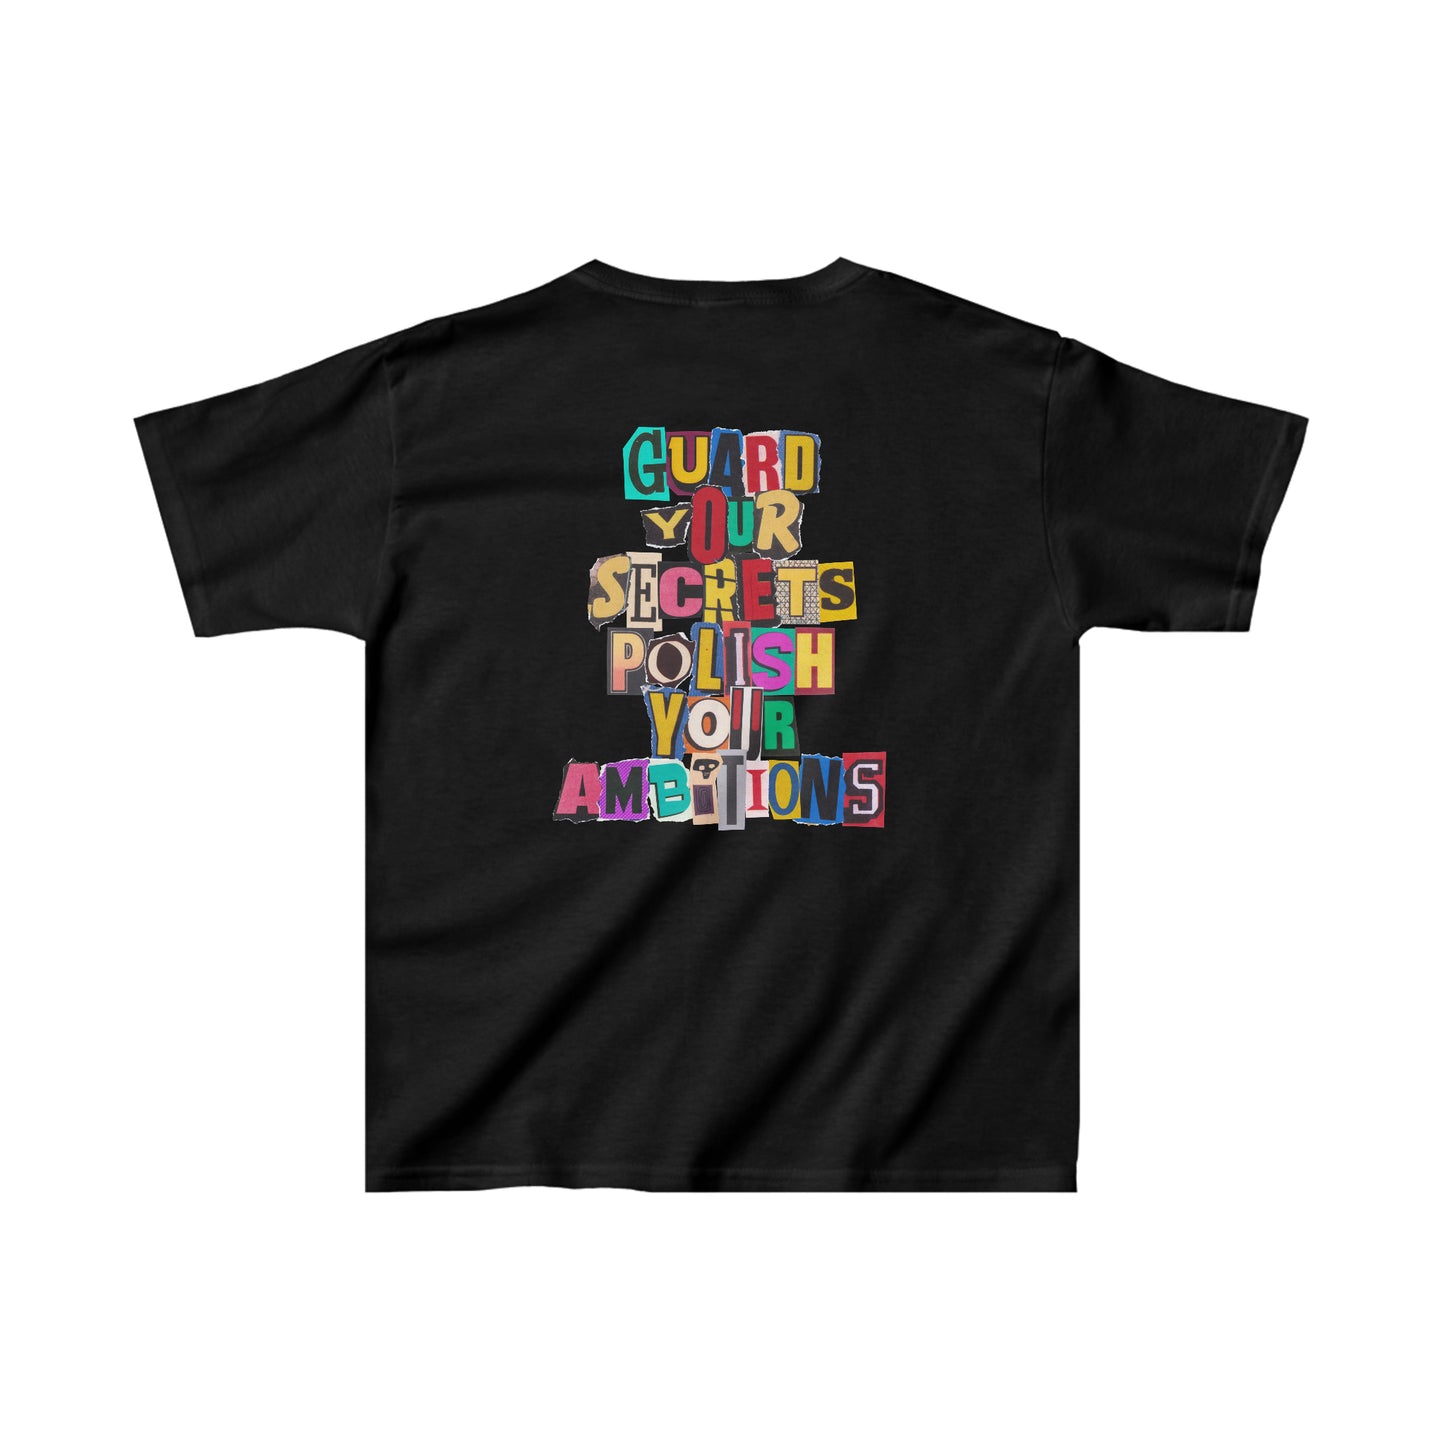 Youth WIY x Kuzma Vintage T-Shirt